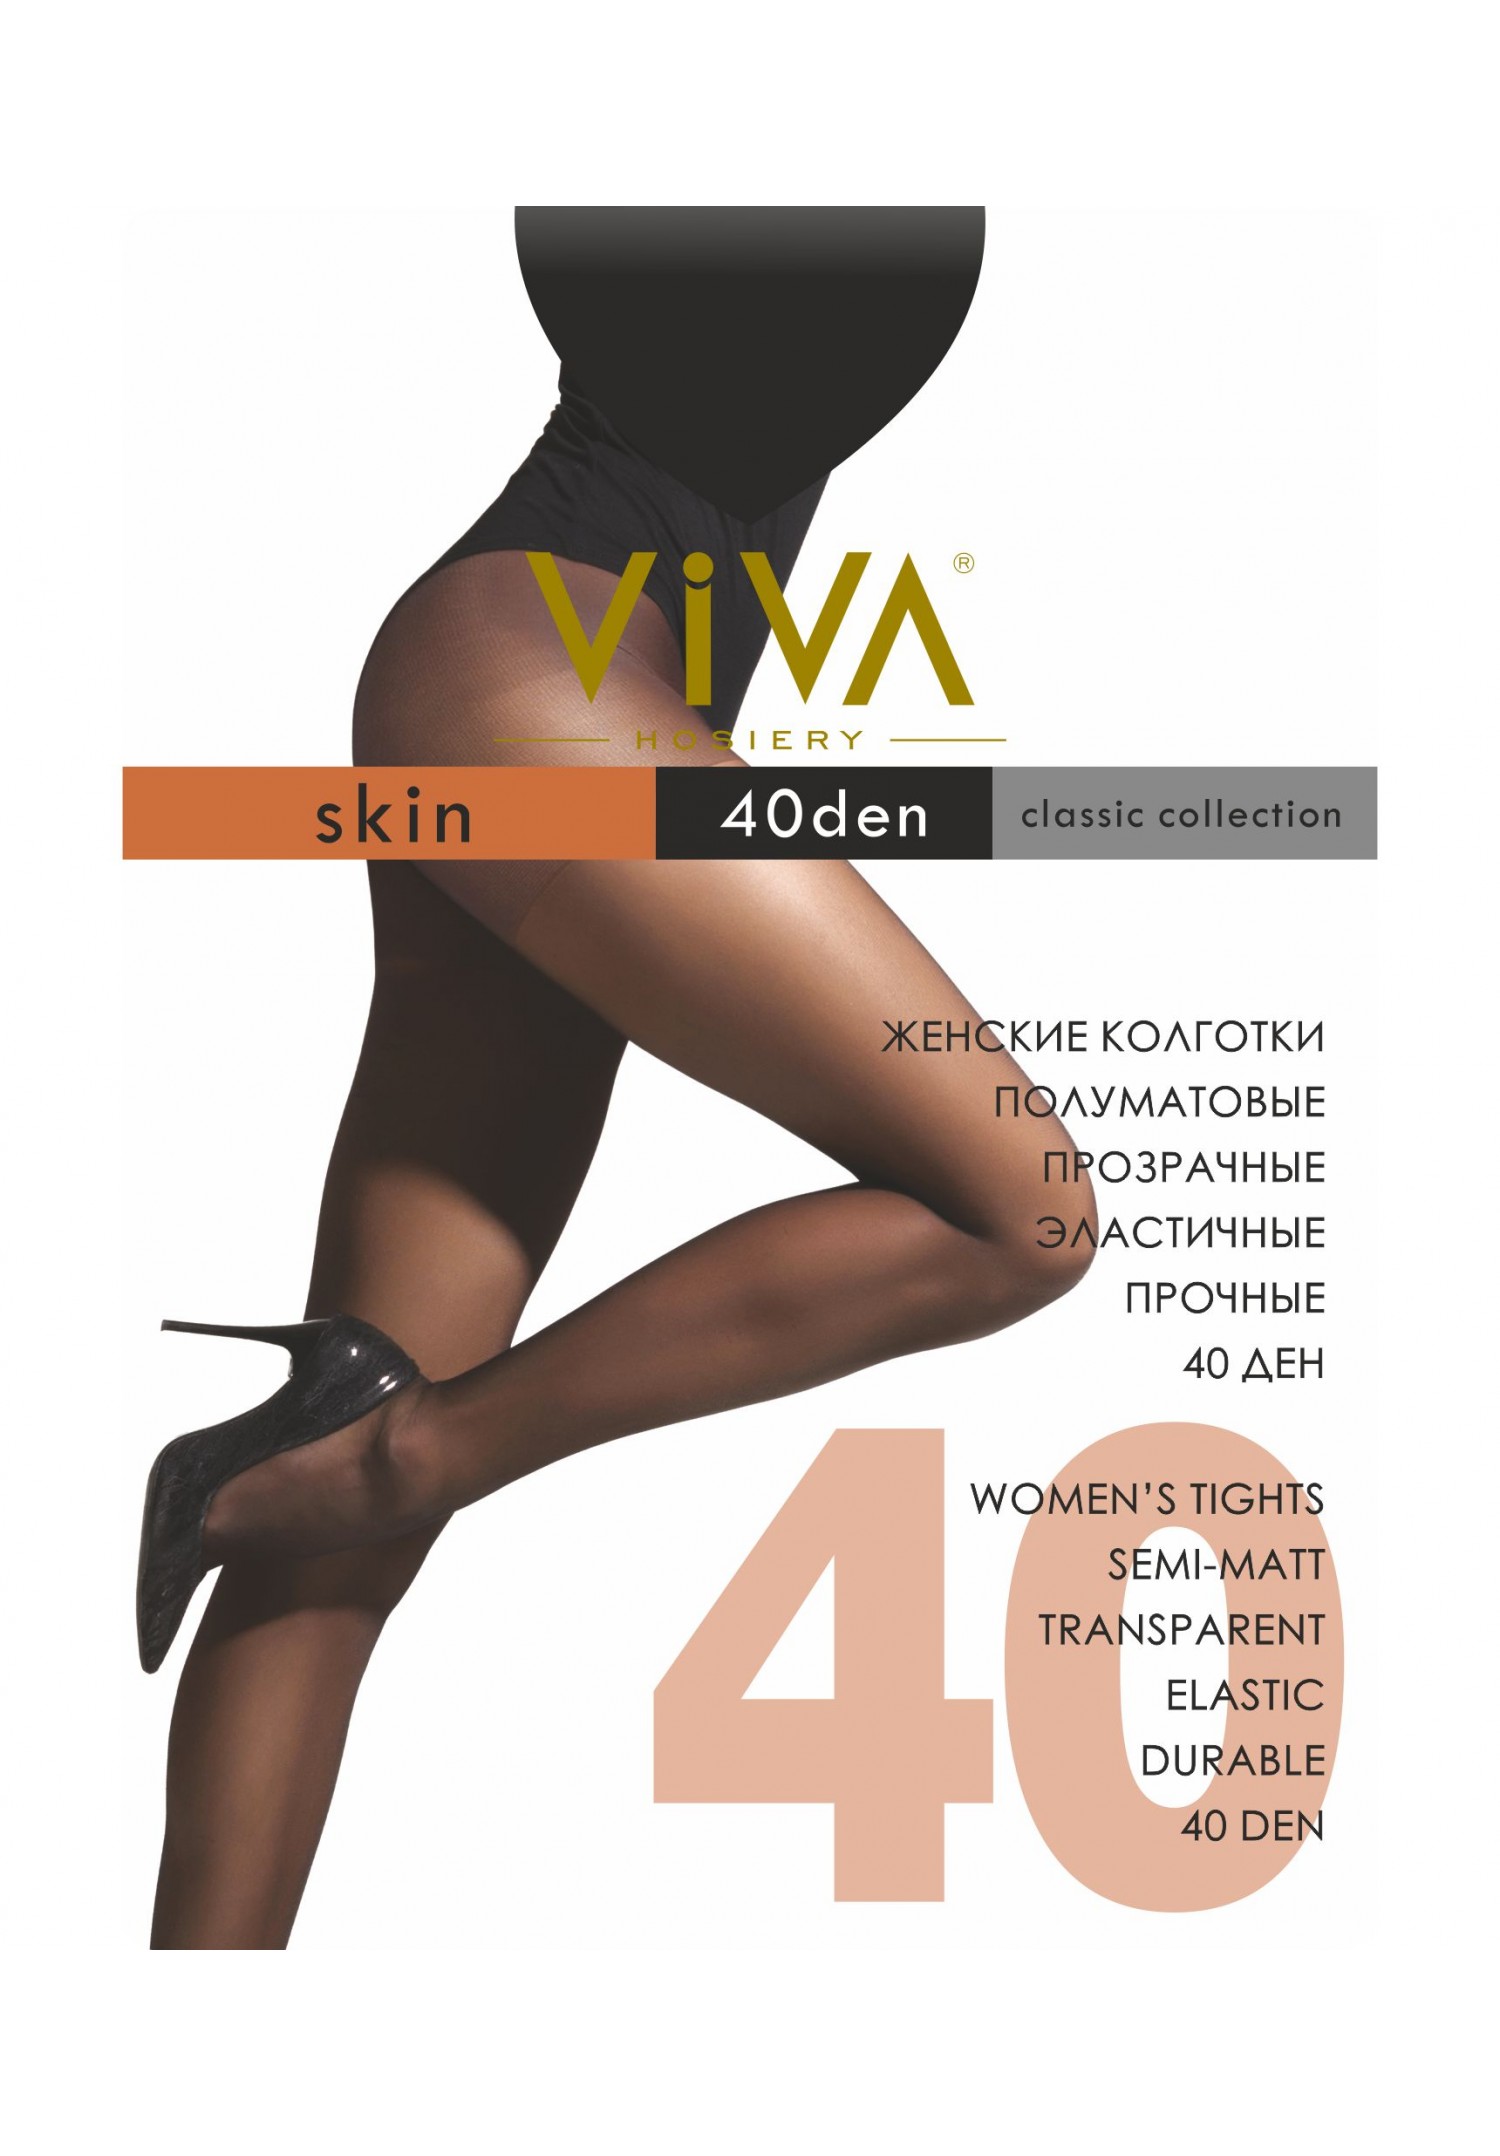 Viva Skin 40 Den Женские Колготки